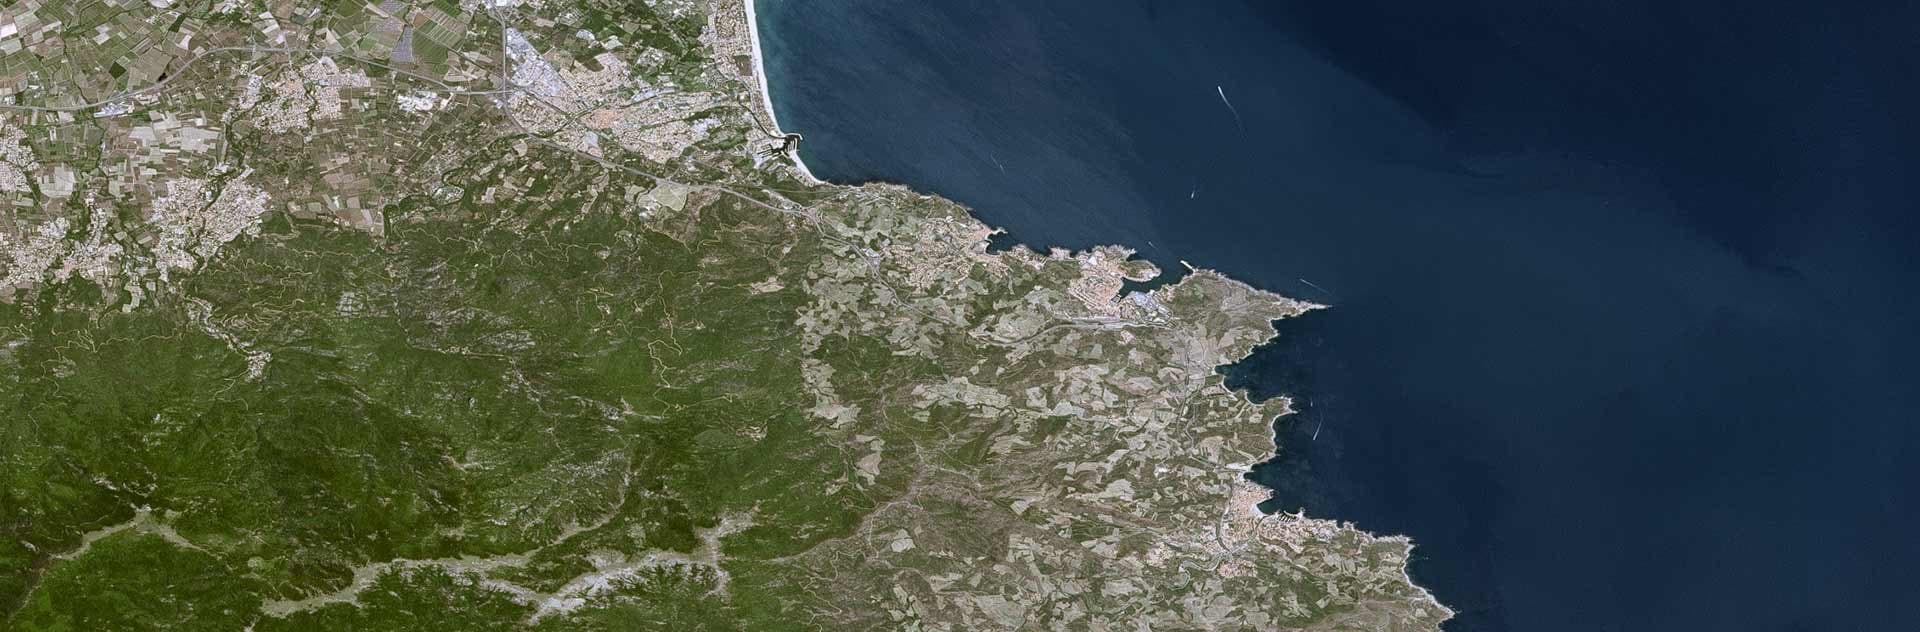 Geospatial imagery case studies by Airbus DS - Pléiades Neo image - 30cm resolution, Pyrénées Orientales, France